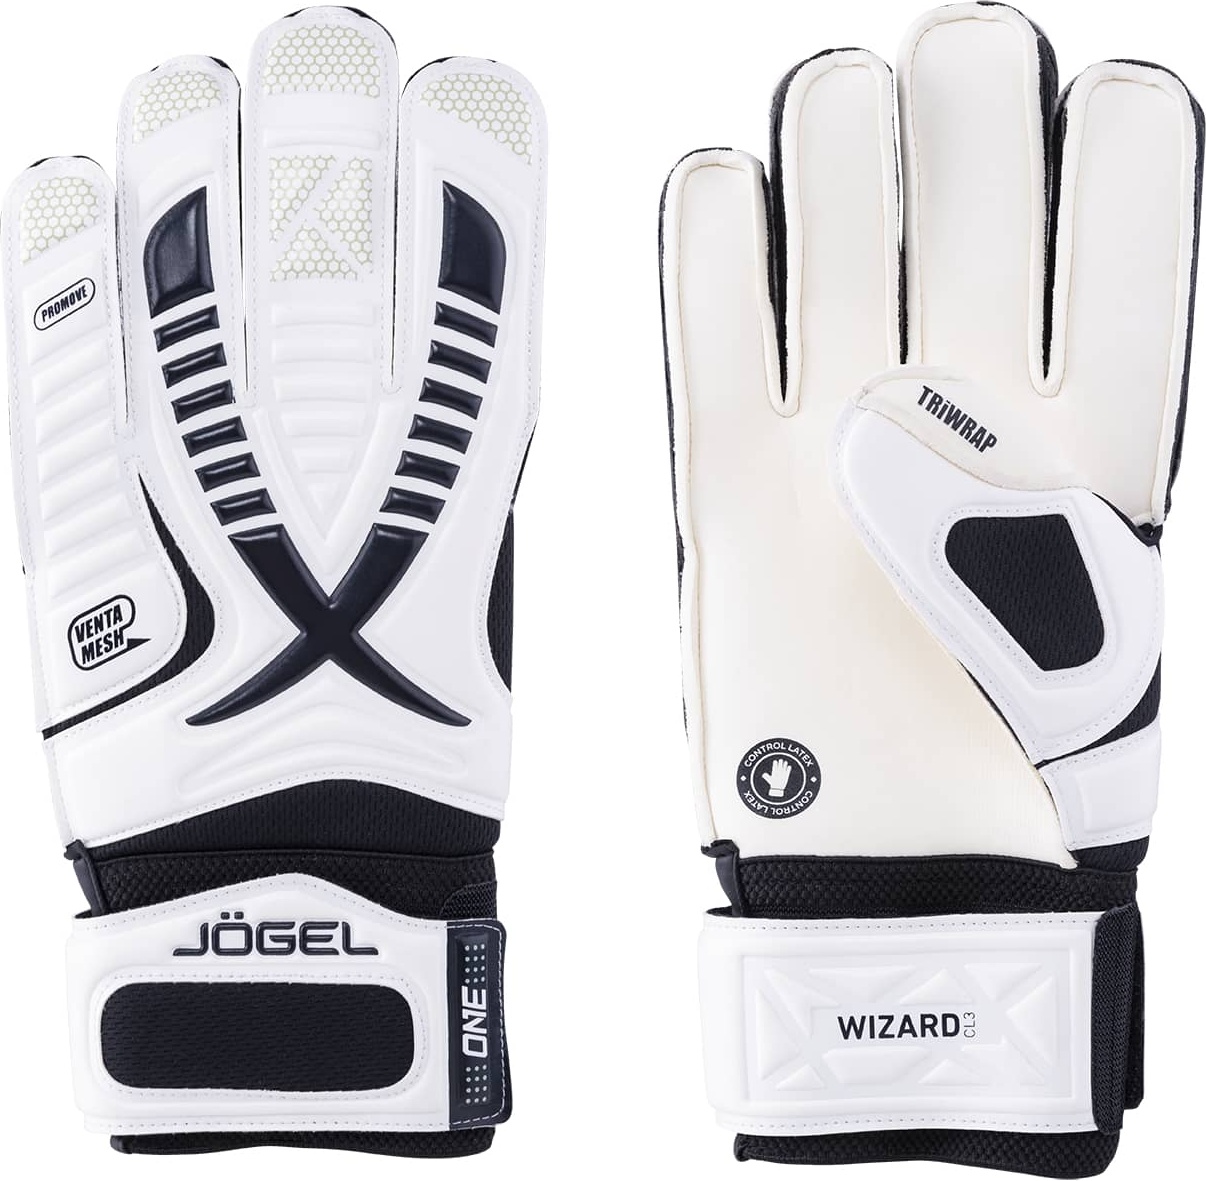 Вратарские перчатки Jogel One Wizard CL3 Flat, white/black, 6